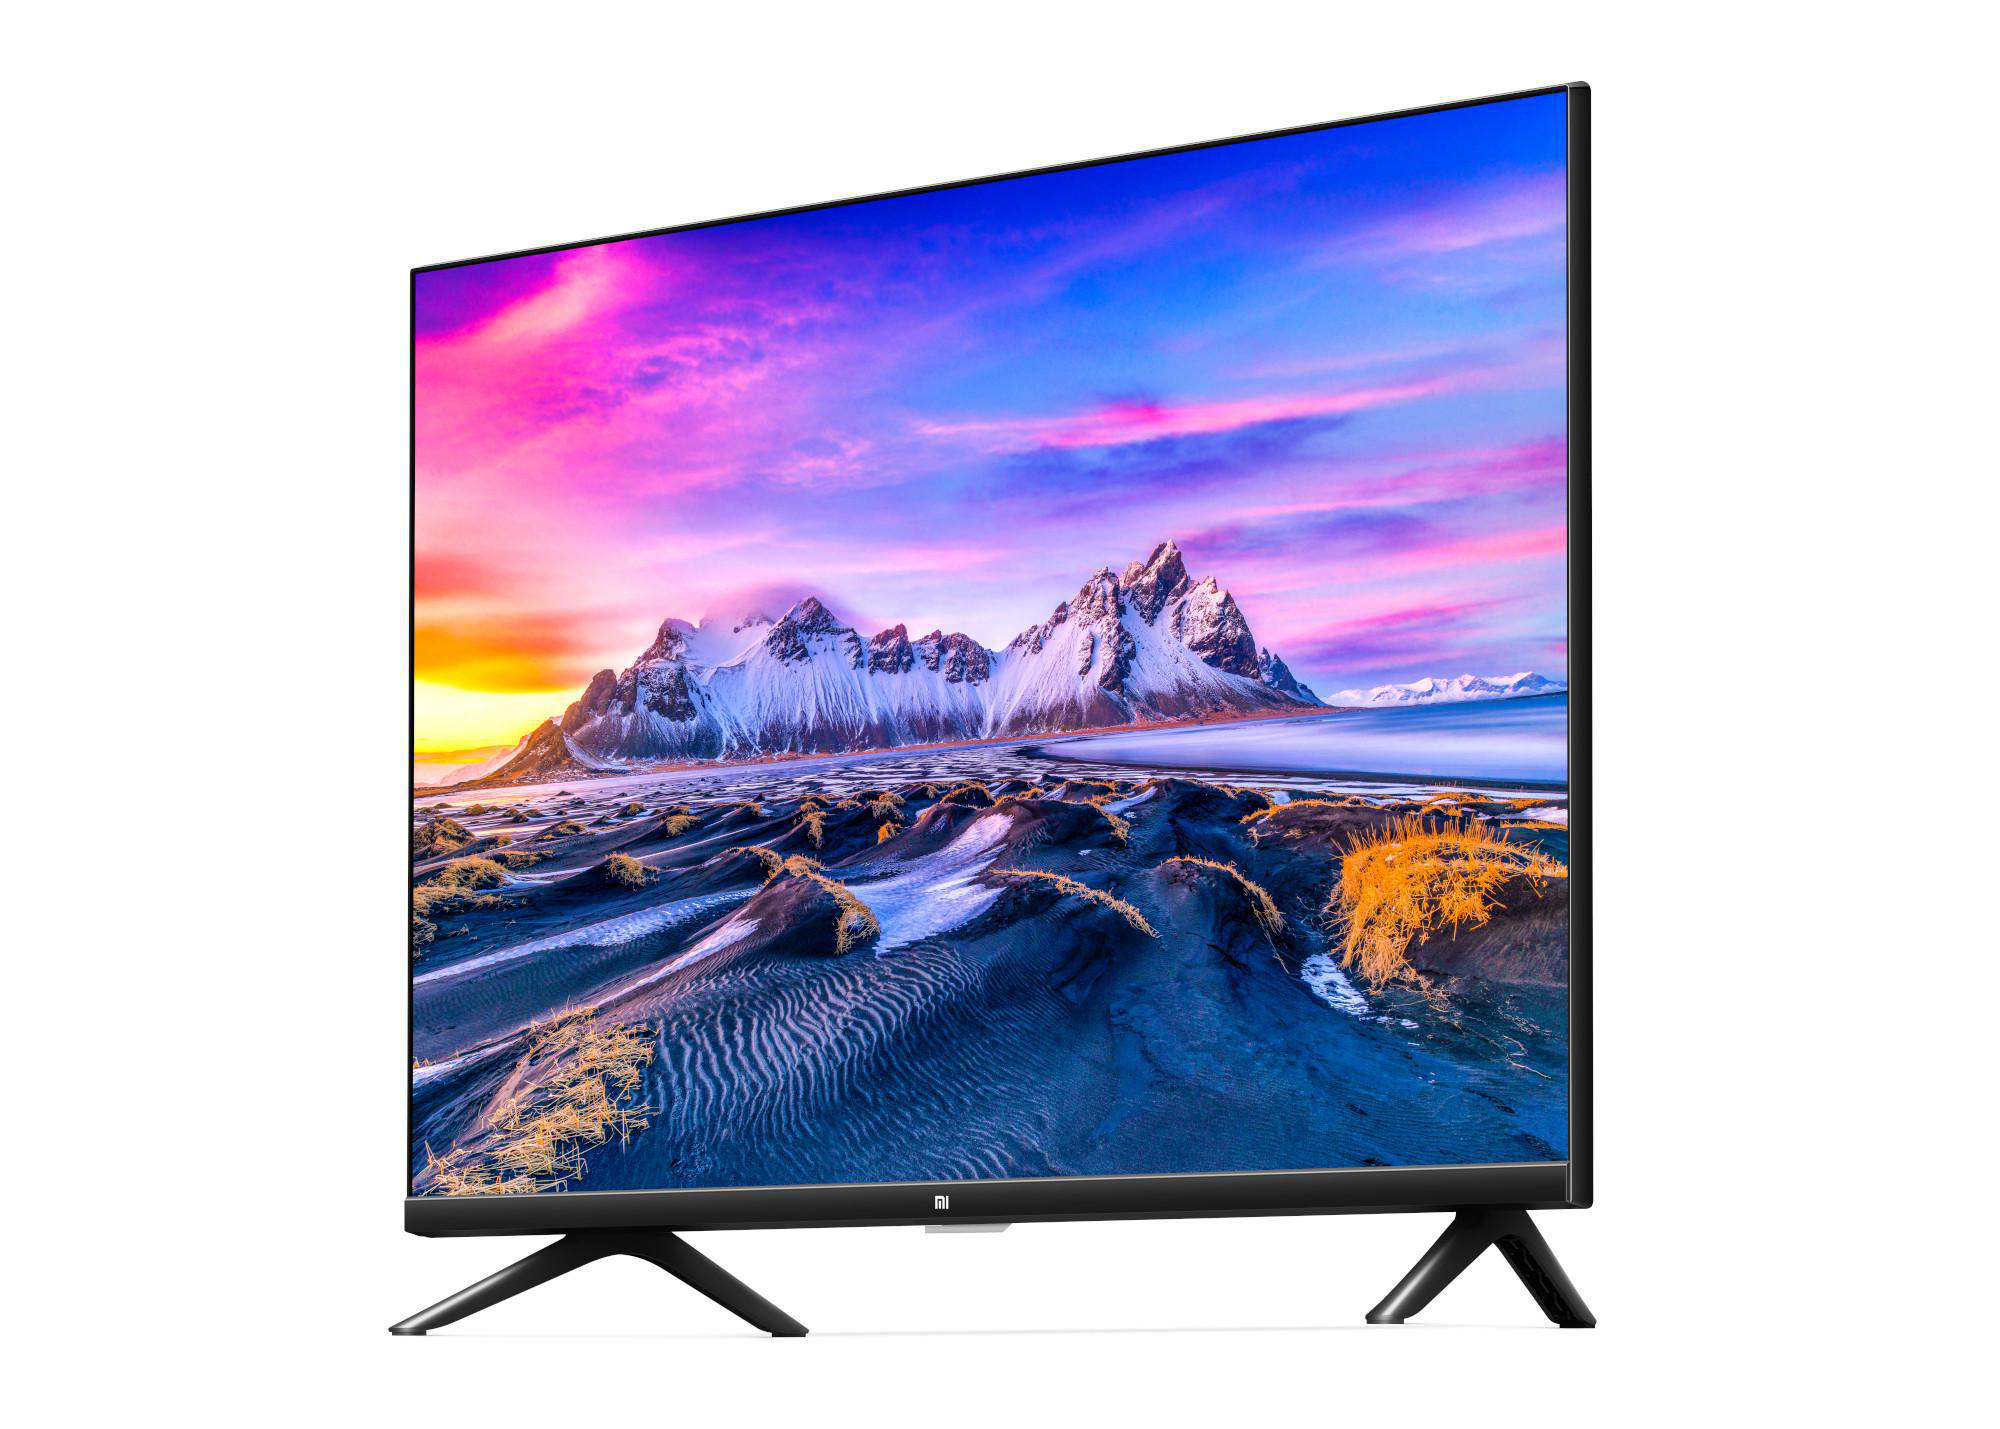 TV SMART HD, 80 cm, P1 XIAOMI TV, Zoll MI 32 TV 32 / 9) Android LED (Flat, LCD